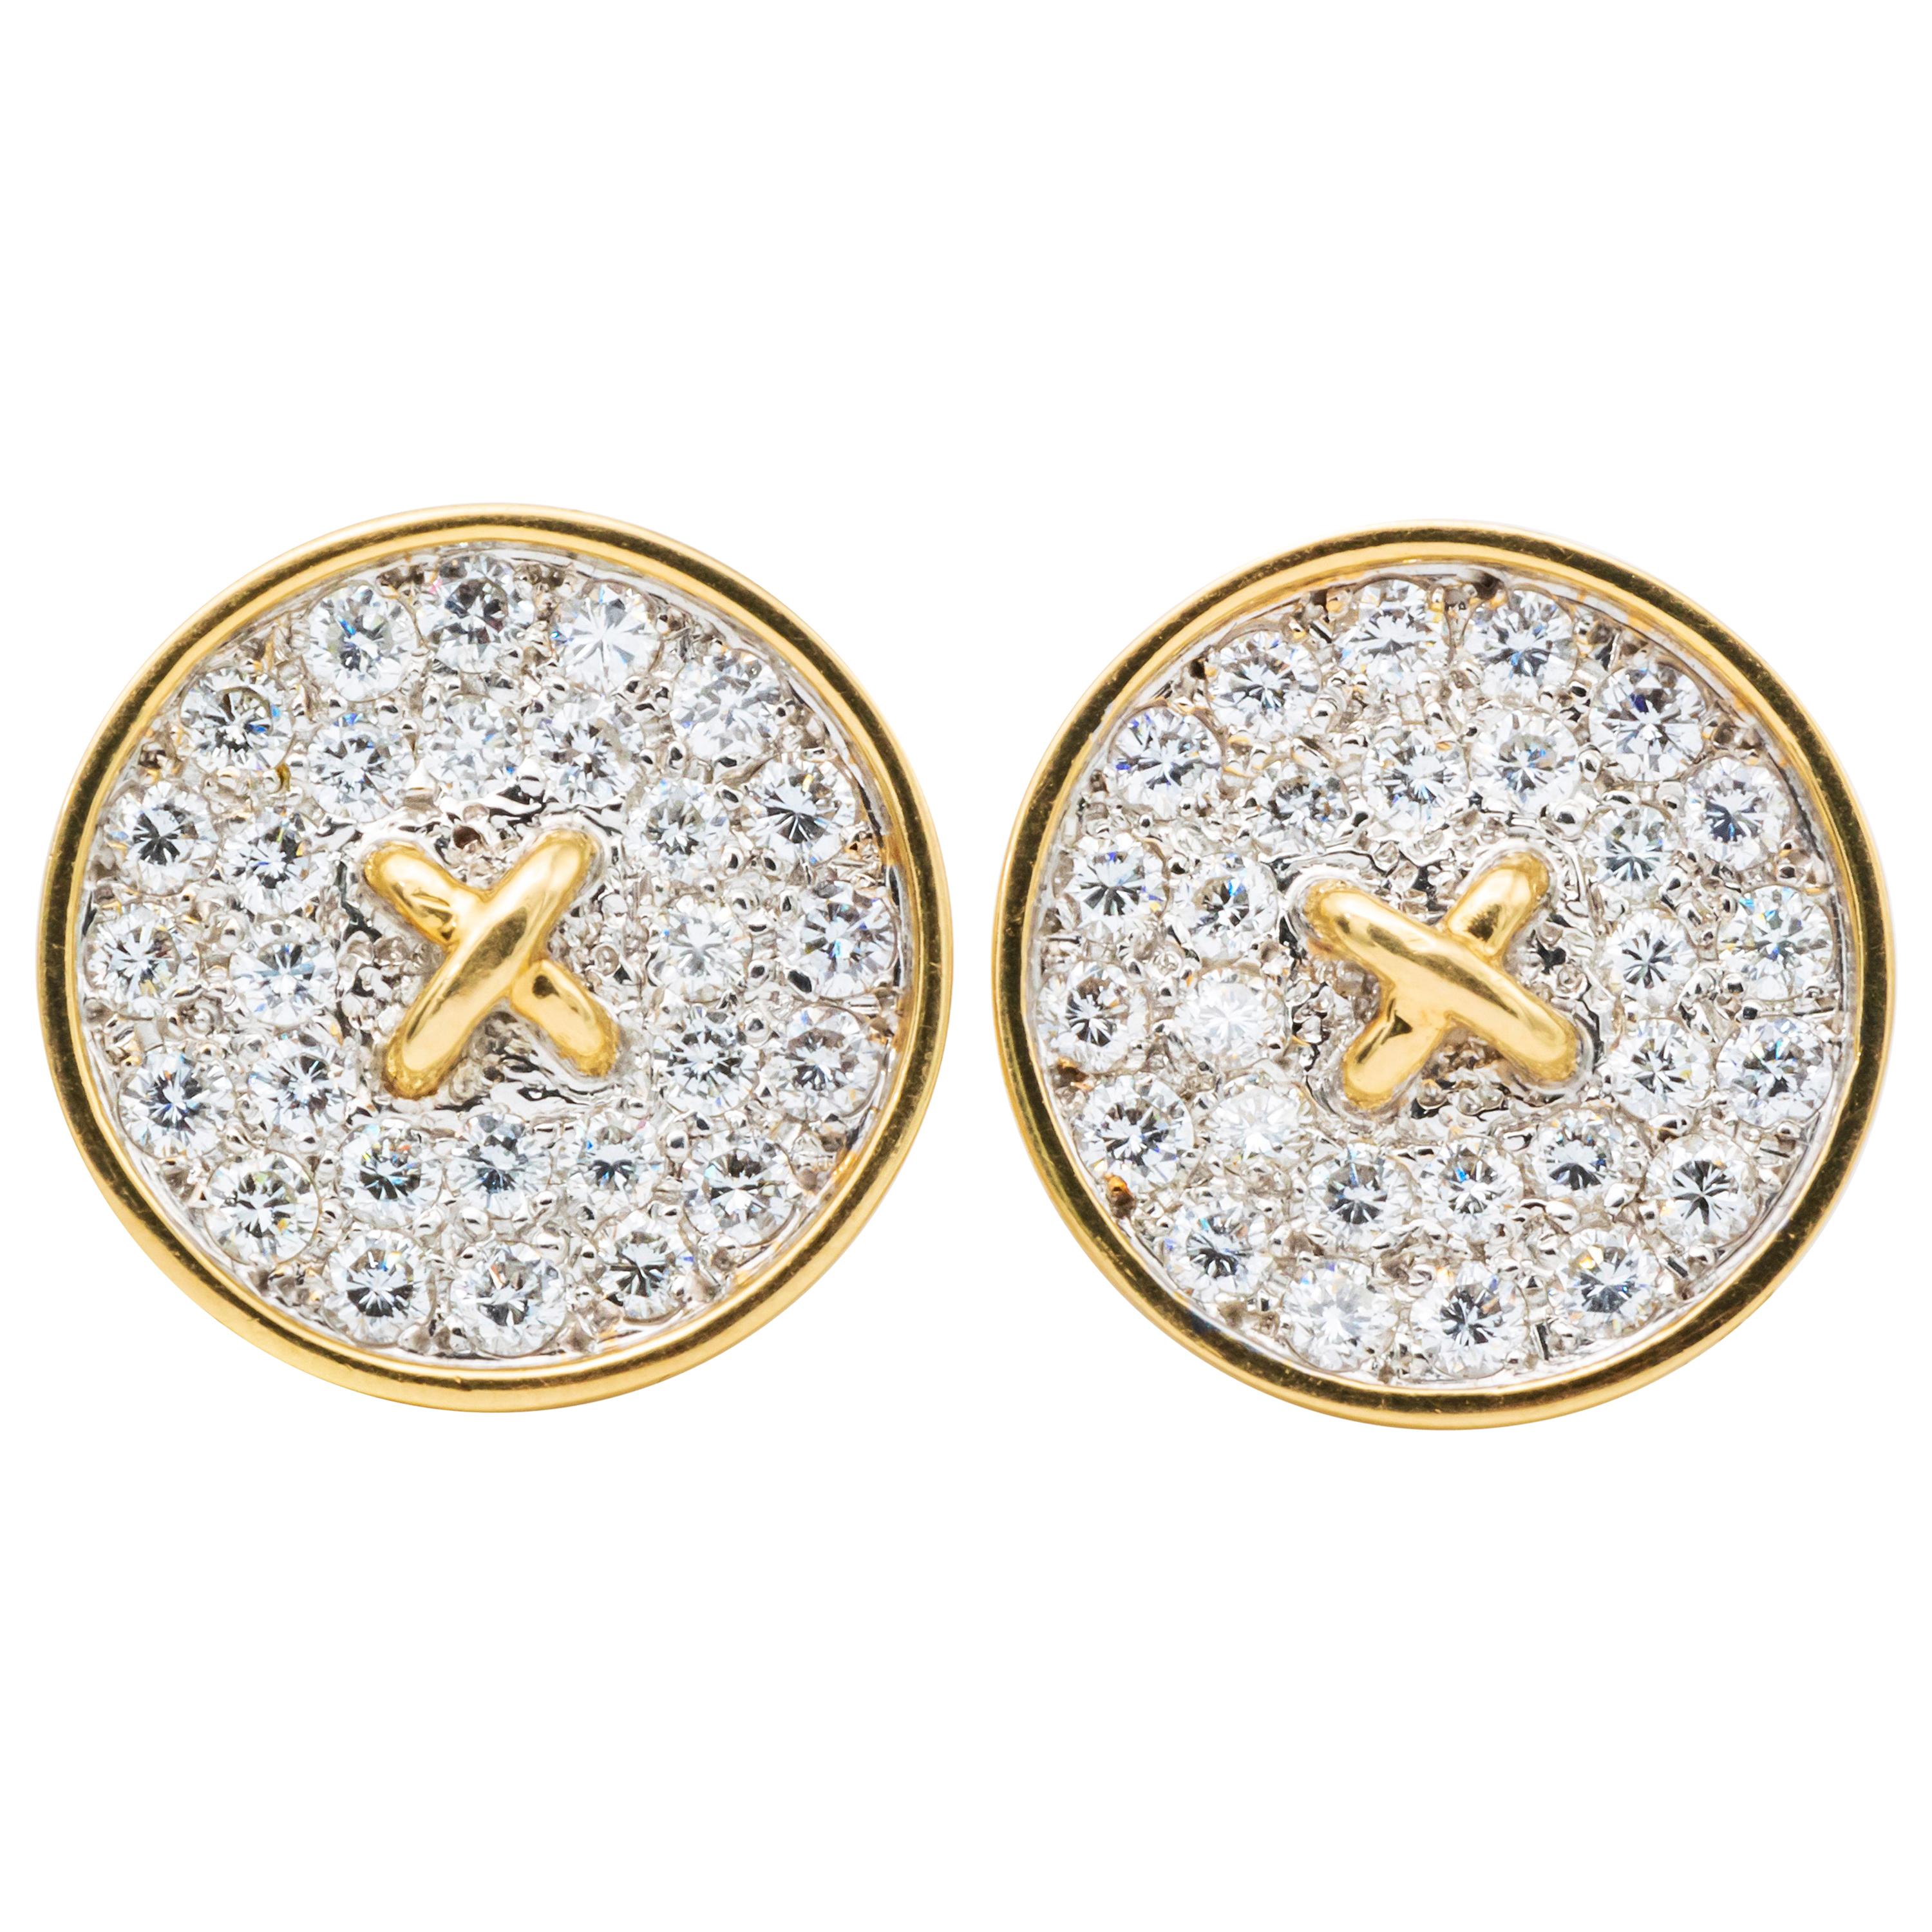 Tiffany & Co. 18 Karat Gold Button Earring